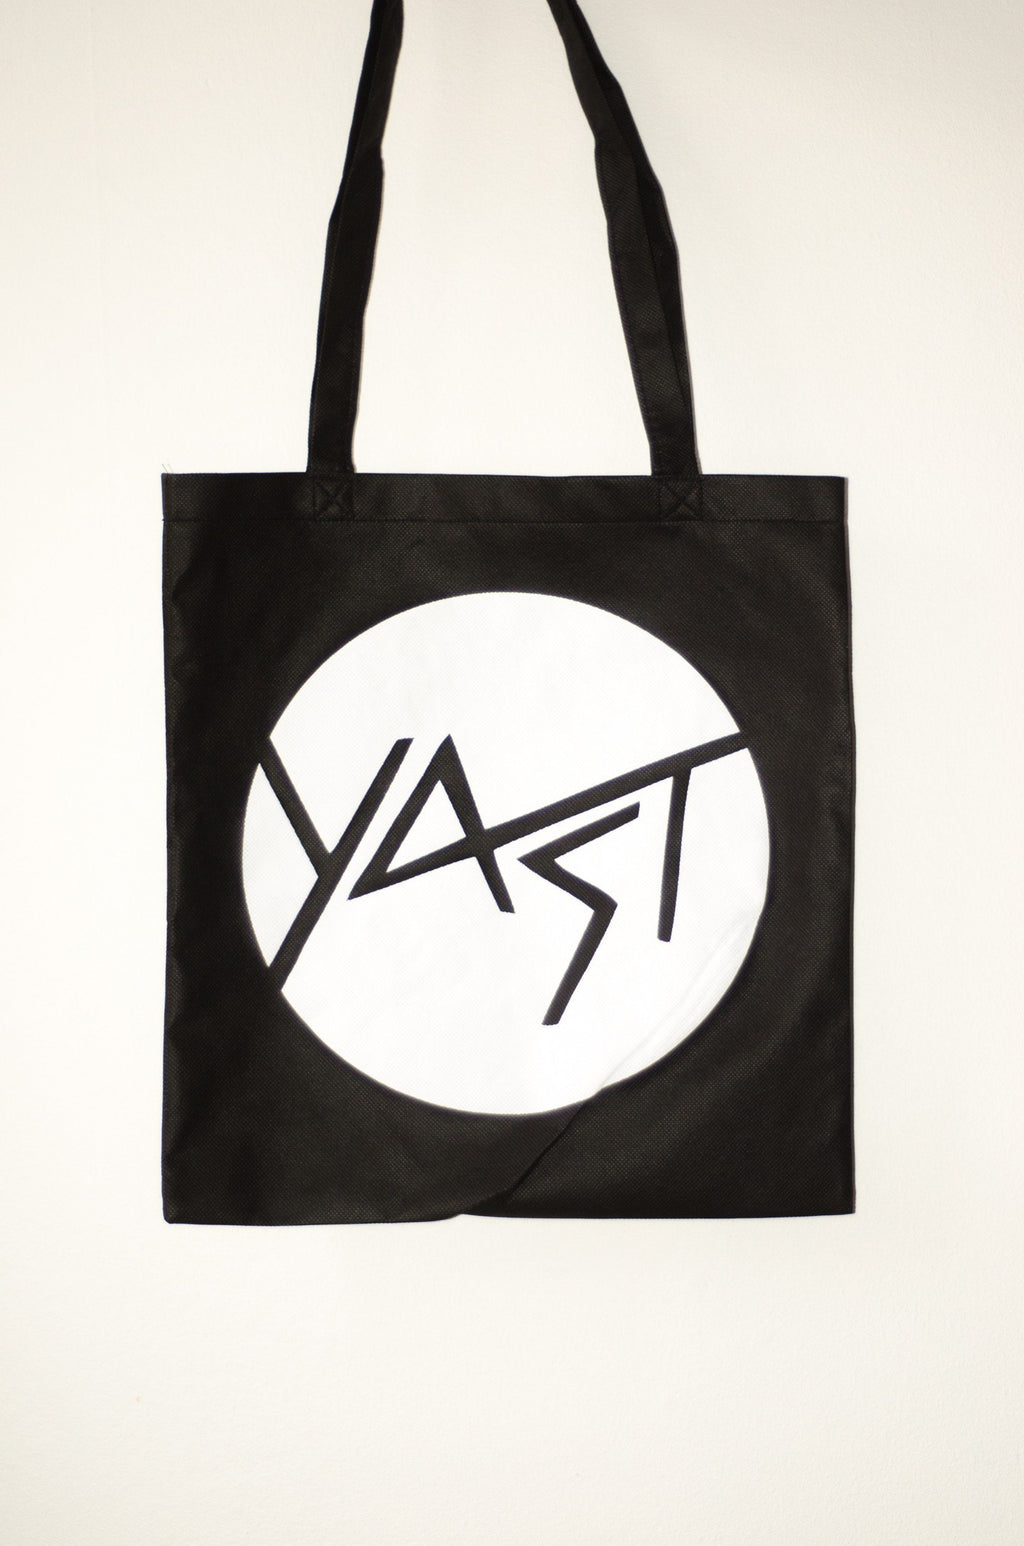 YAST - Bag